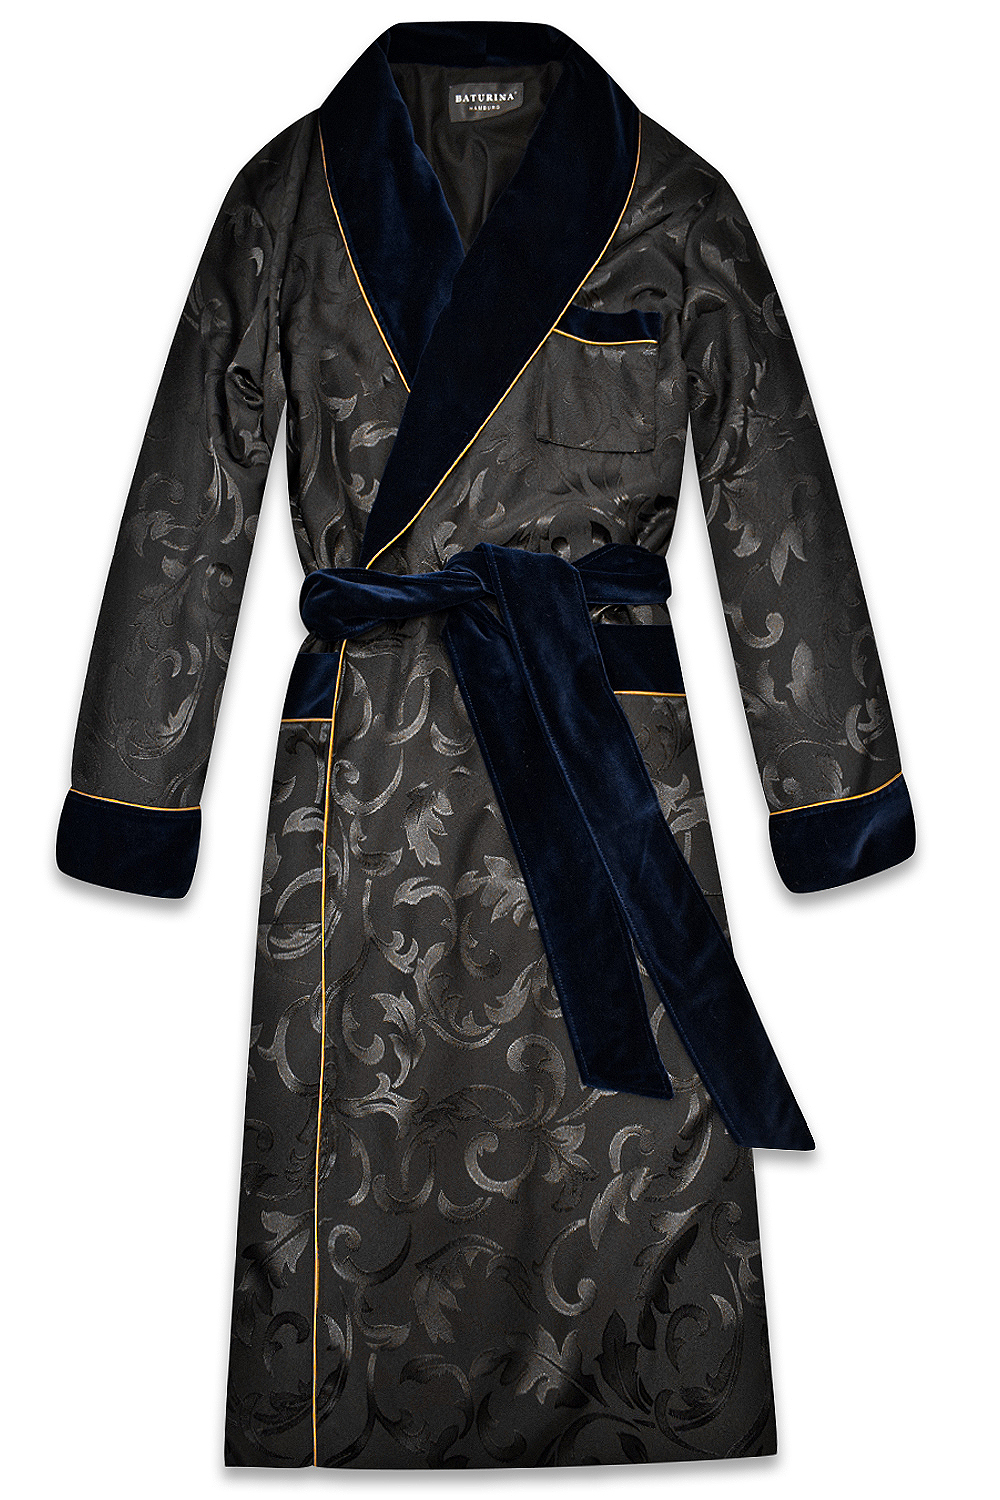 Men's Quilted Silk Luxury Dressing Gown, Gentleman's Paisley